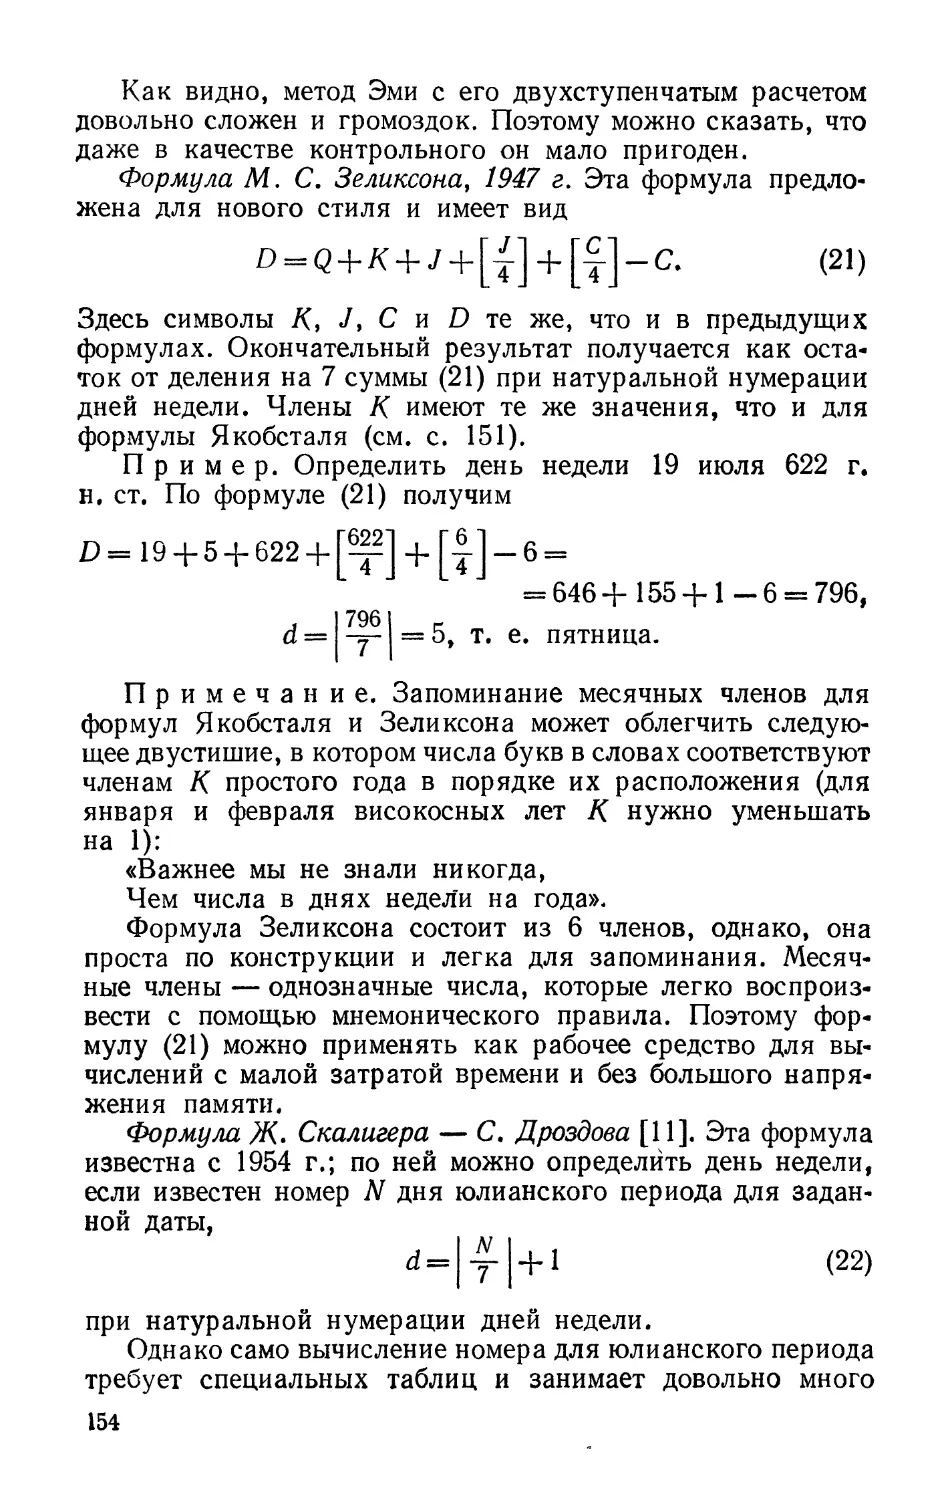 Формула М. С. Зеликсона, 1947 г.
Формула Ж. Скалигера — С. Дроздова